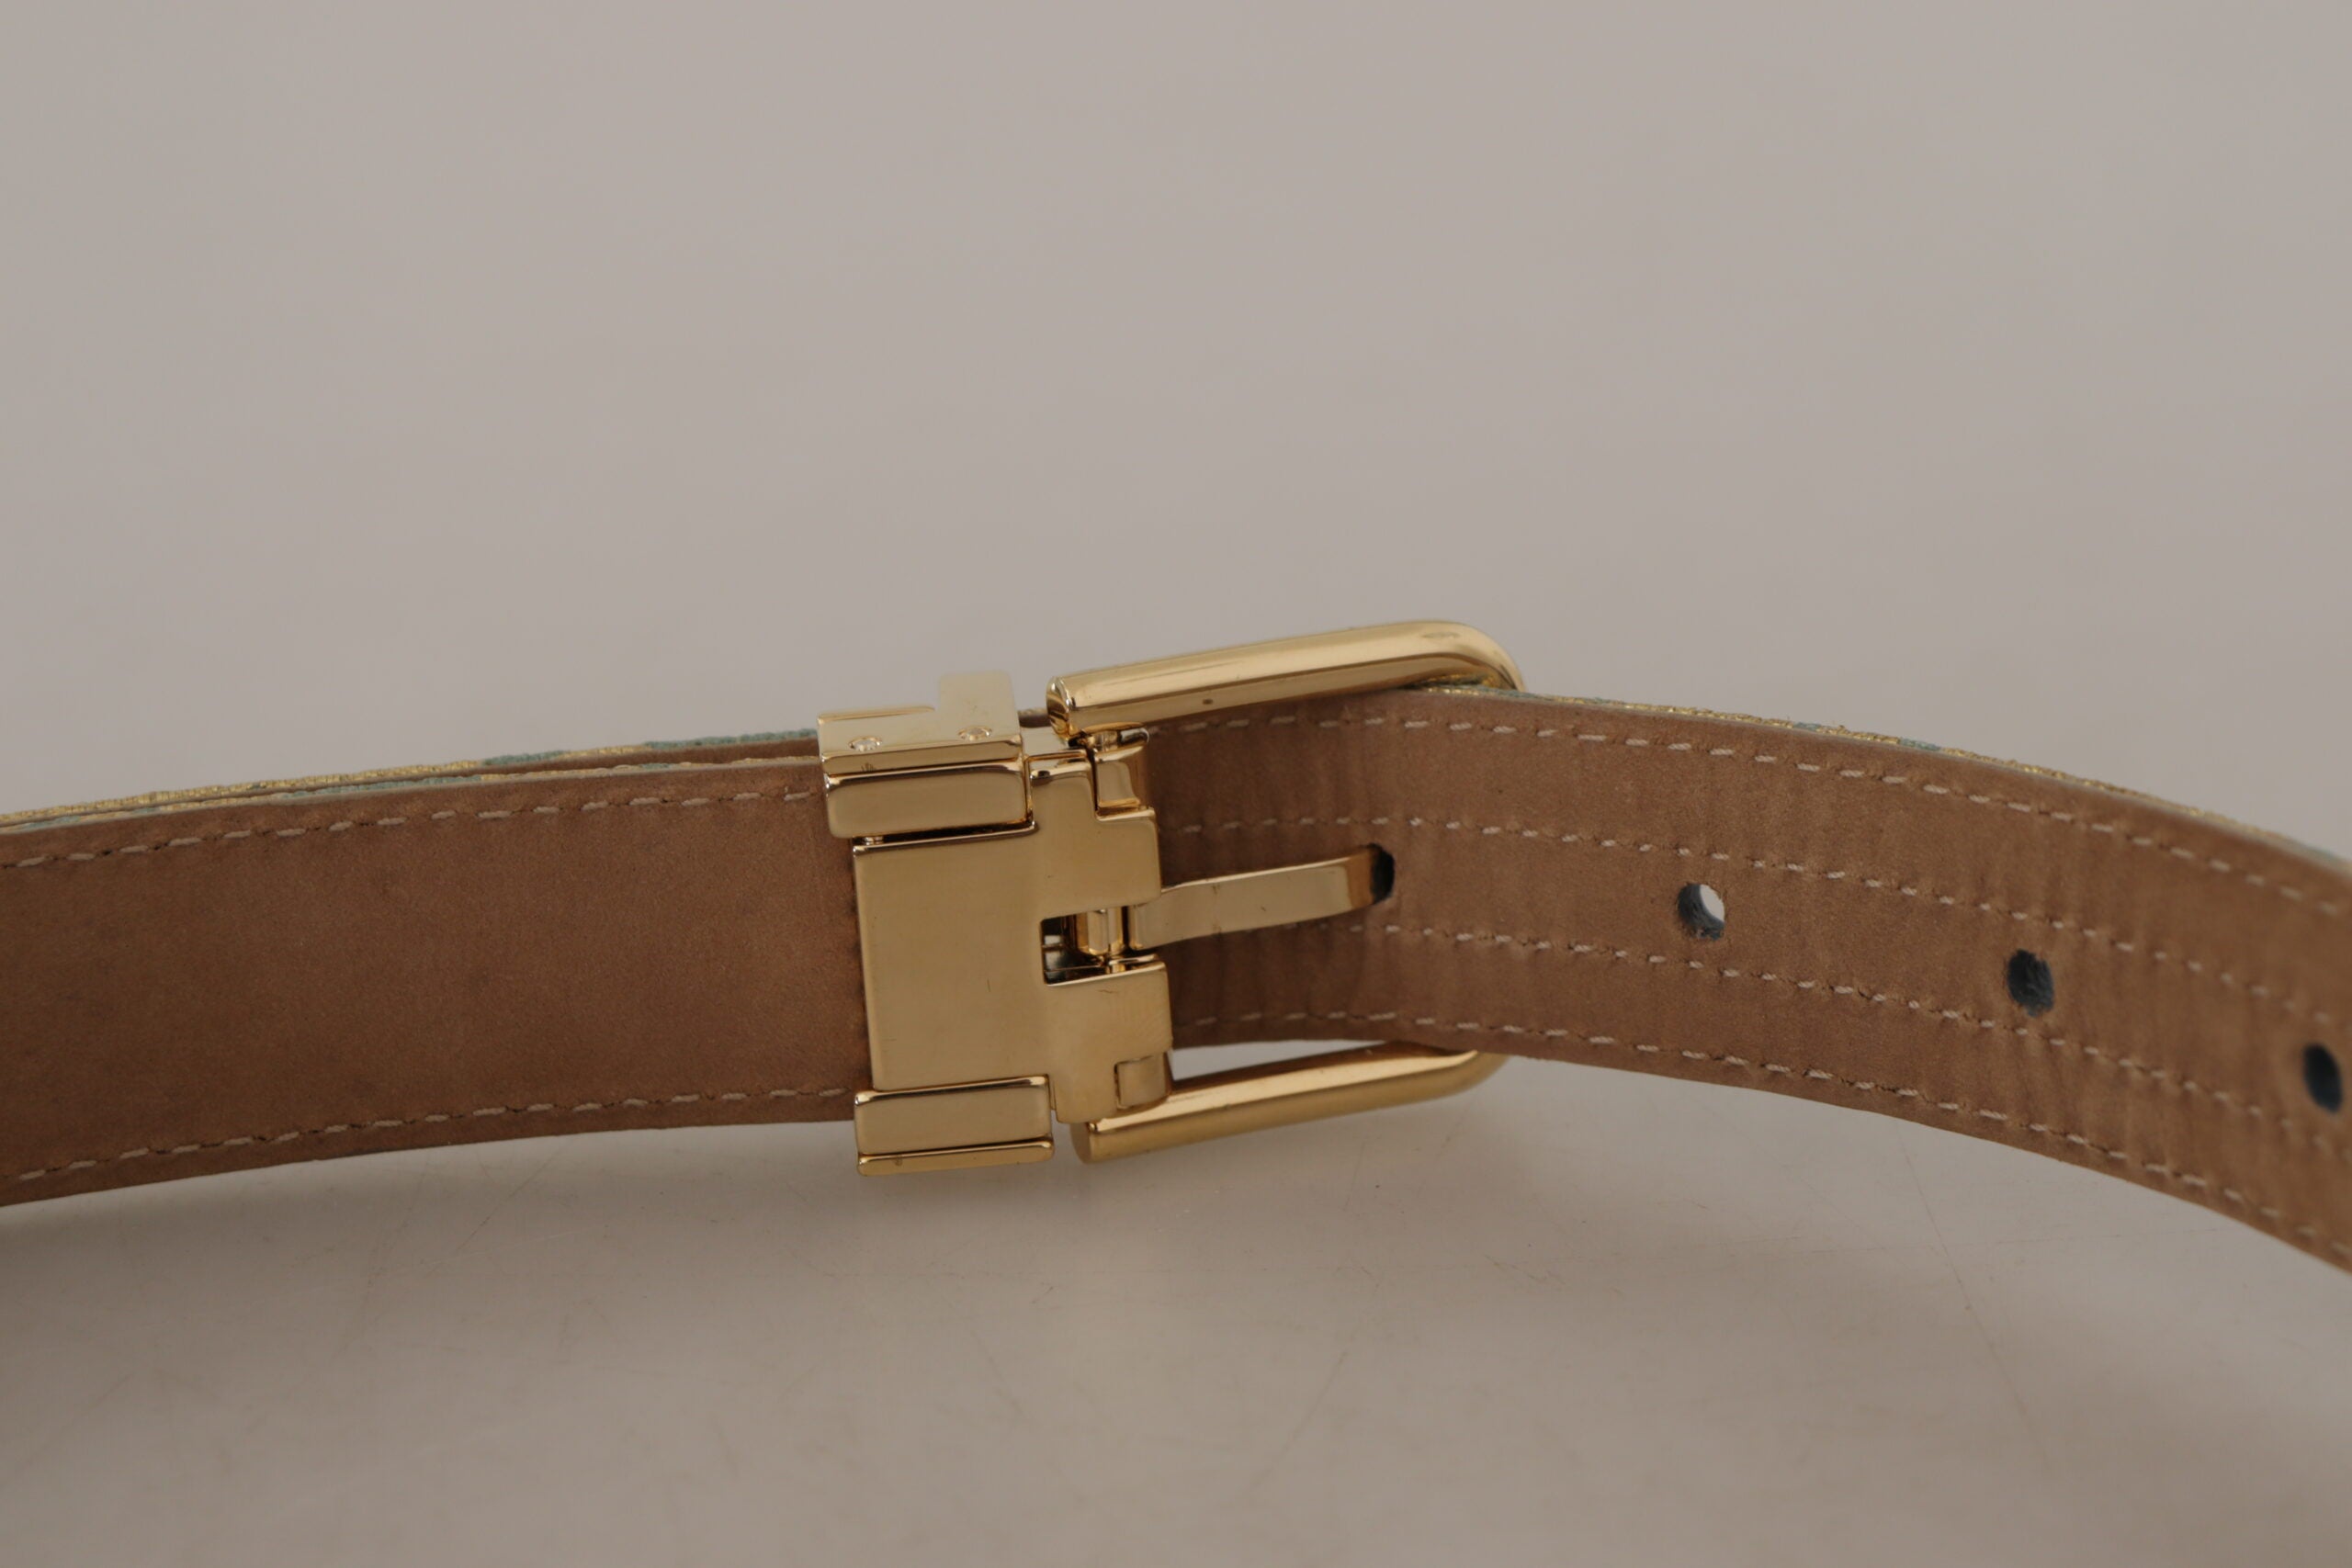 Dolce & Gabbana Elegant Light Blue Leather Belt with Gold Buckle